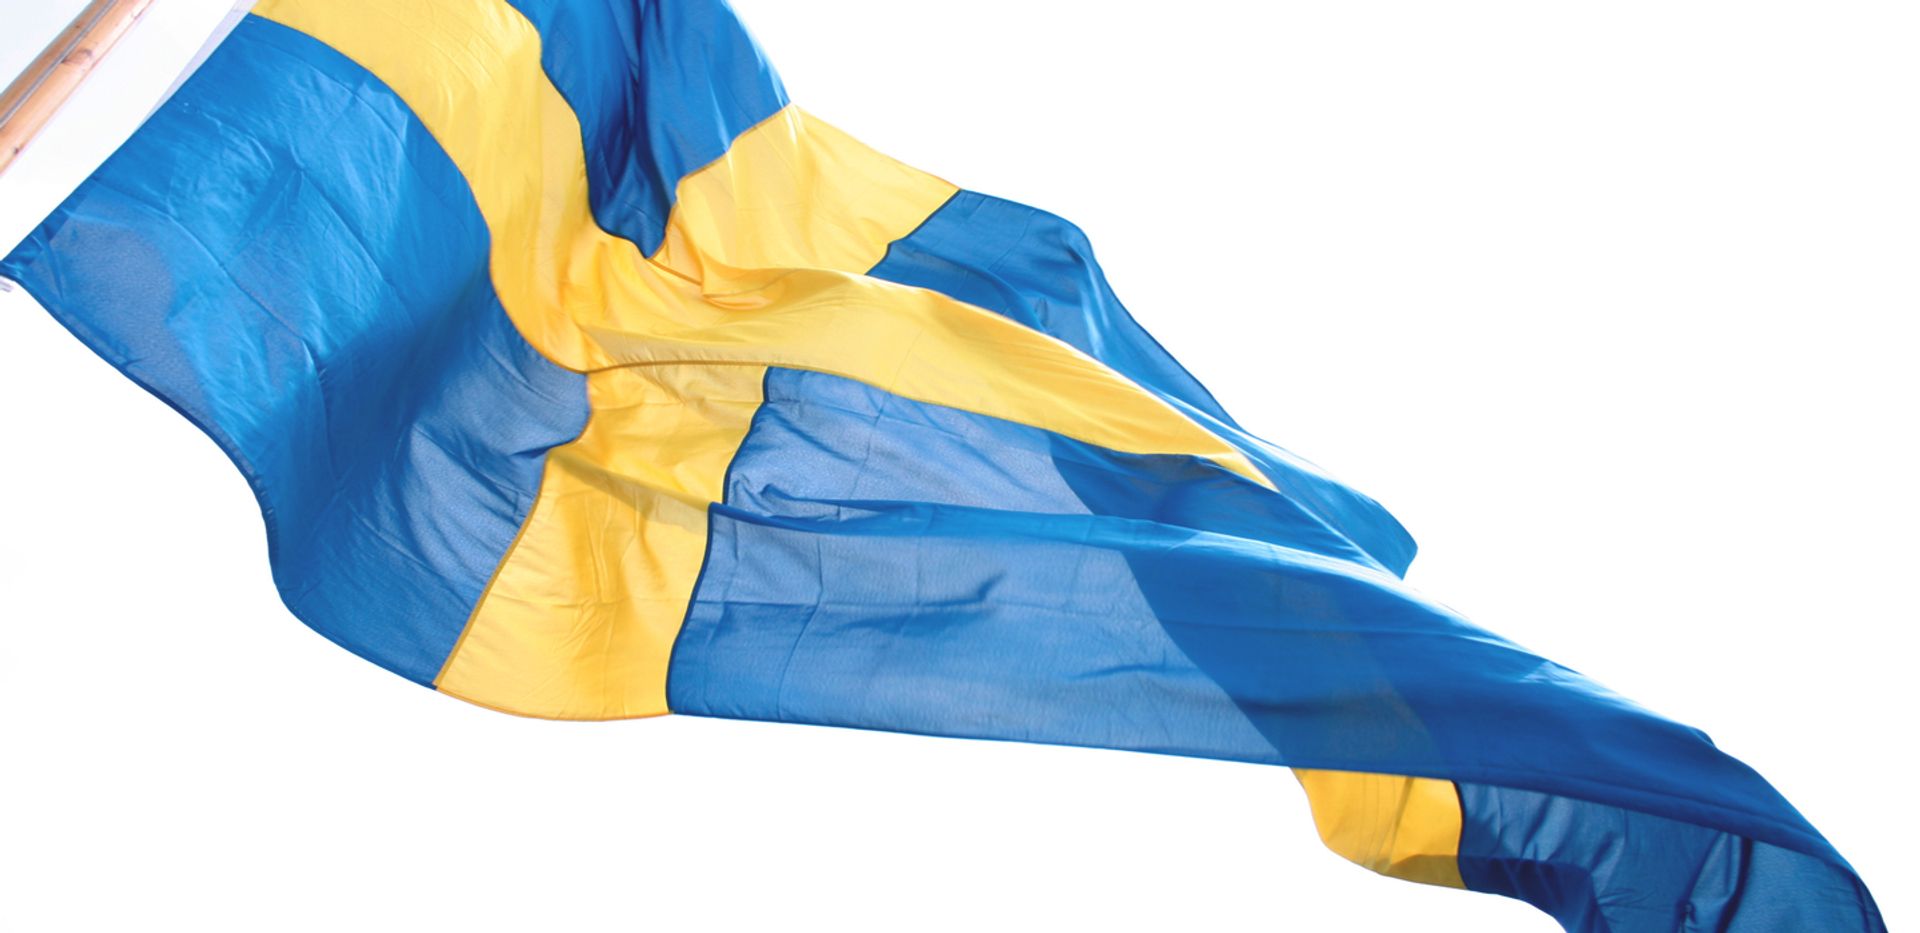 Swedish flag.